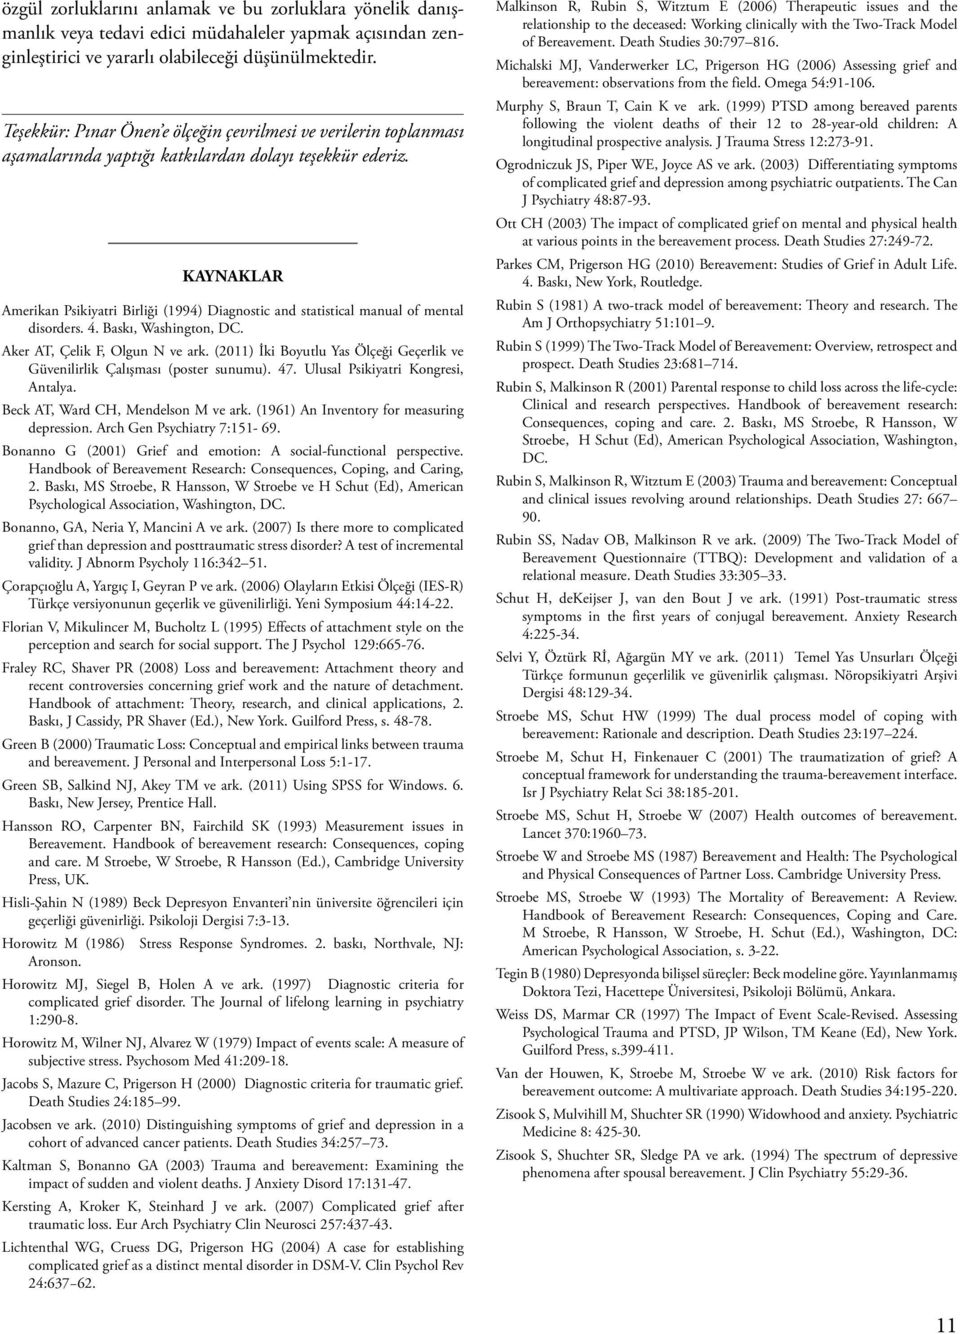 KAYNAKLAR Amerikan Psikiyatri Birliği (1994) Diagnostic and statistical manual of mental disorders. 4. Baskı, Washington, DC. Aker AT, Çelik F, Olgun N ve ark.